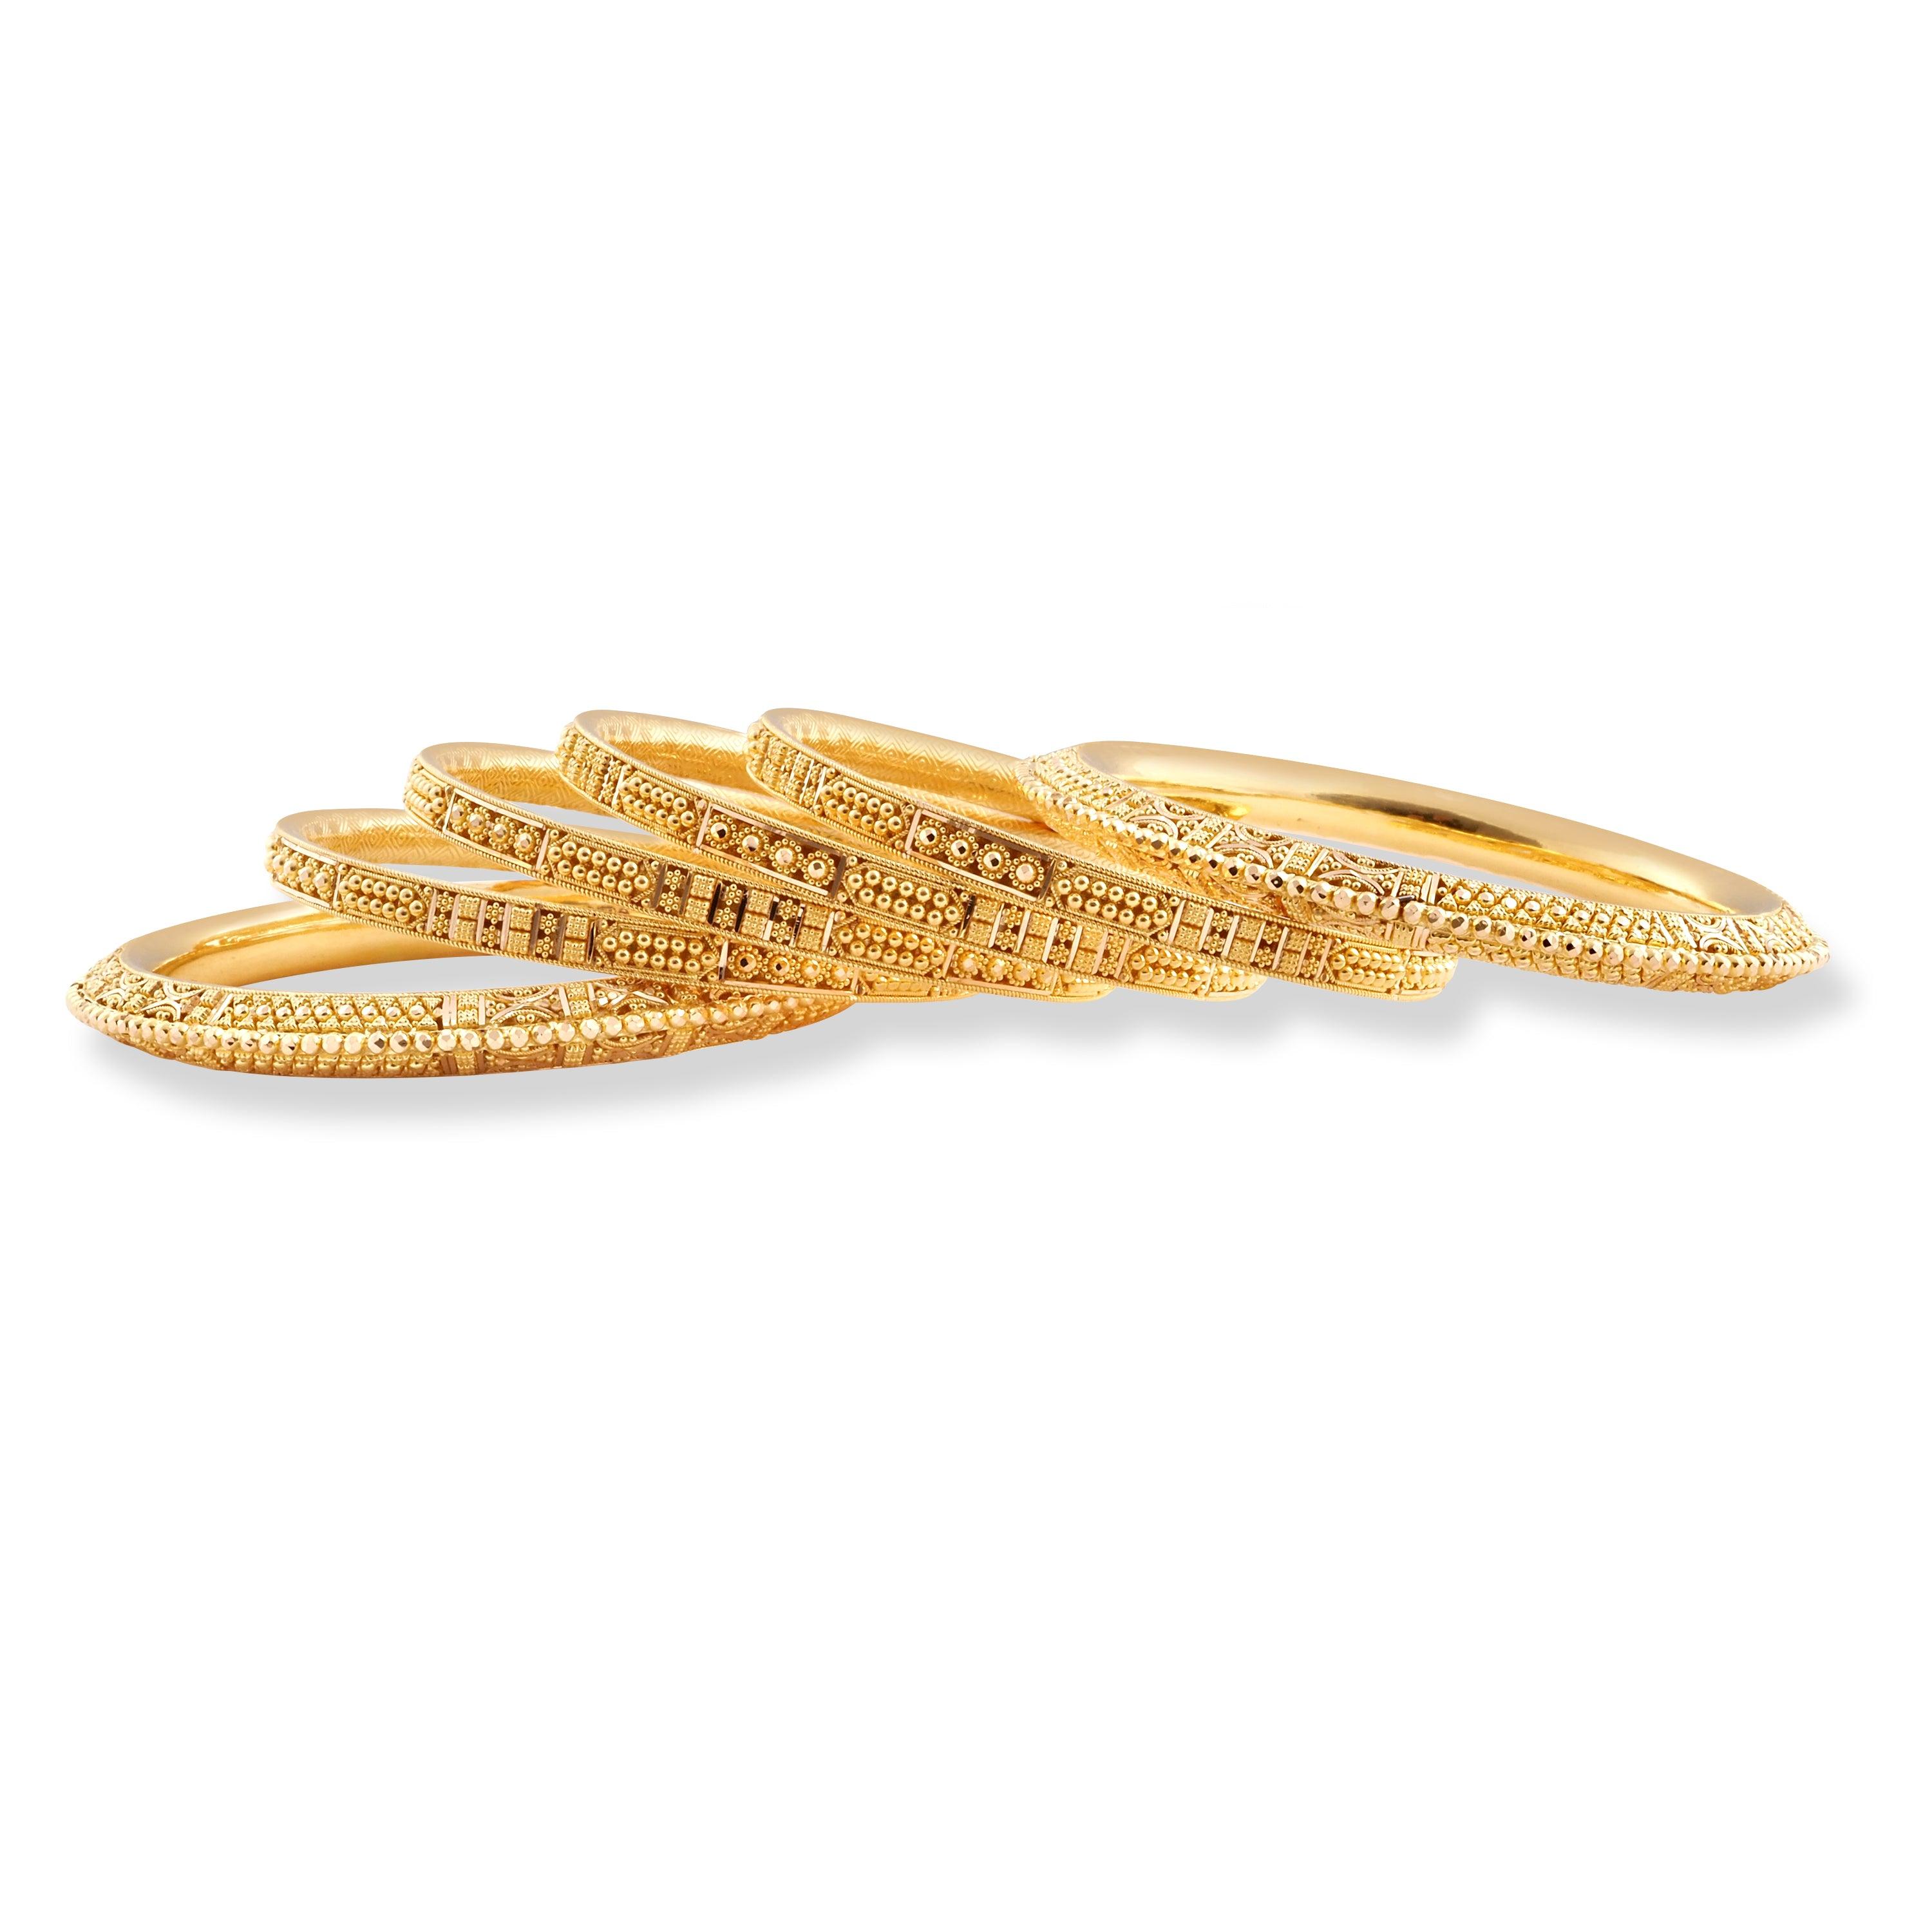 Set of Six 22ct Gold Bangles with Diamond Cut Bead Design and Filigree Work B-8570 - Minar Jewellers